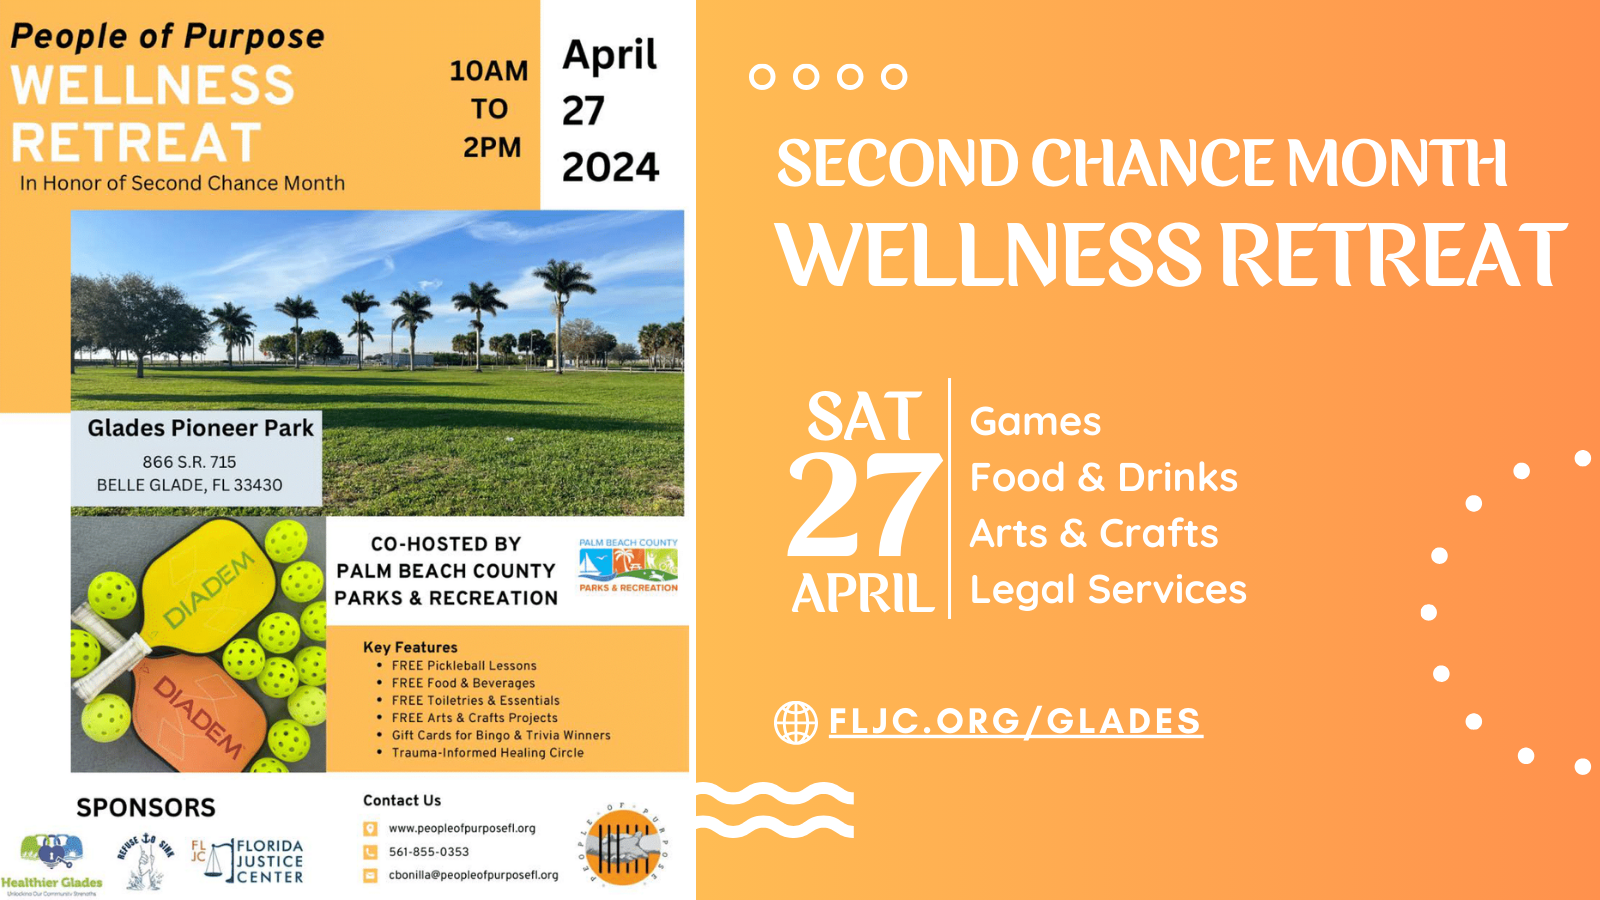 2024-04-27 - Belle Glade Wellness Retreat - Social Share